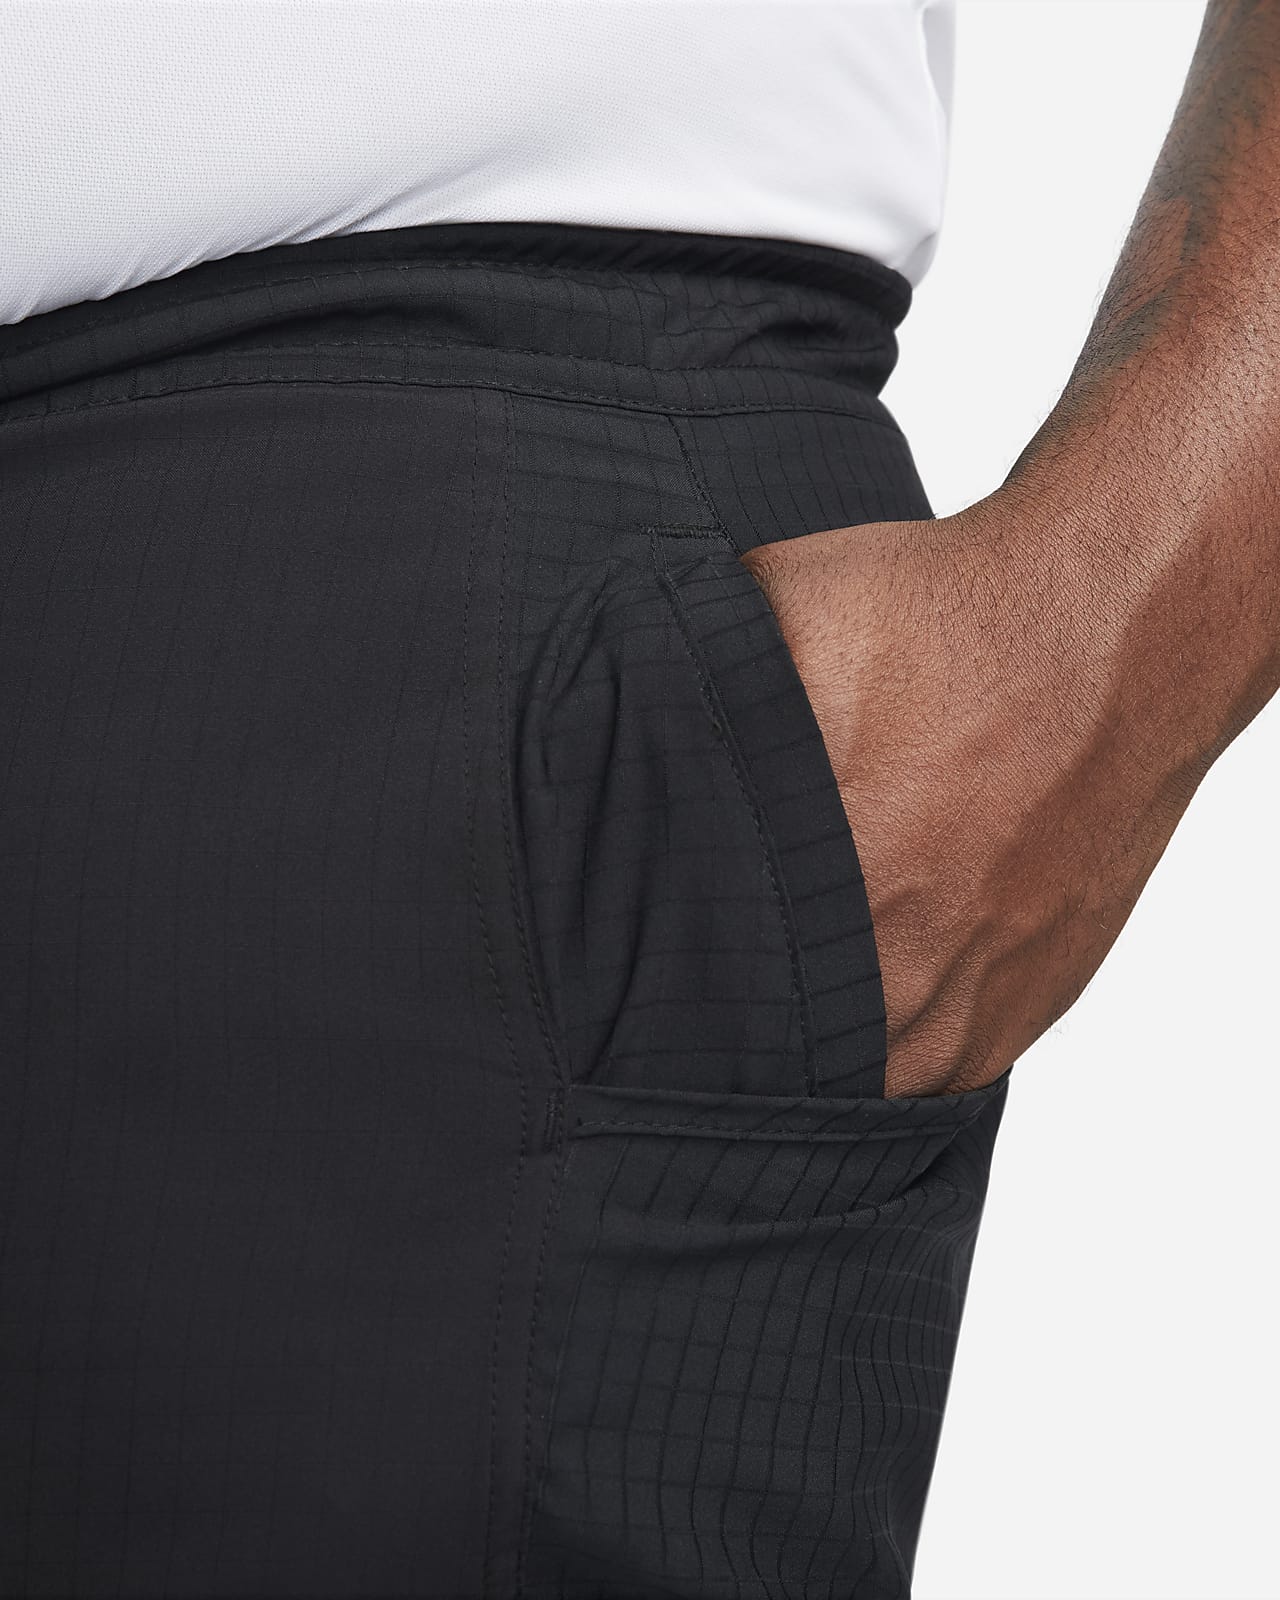 Nike Dri Fit Activewear Pants Size XL — Family Tree Resale 1